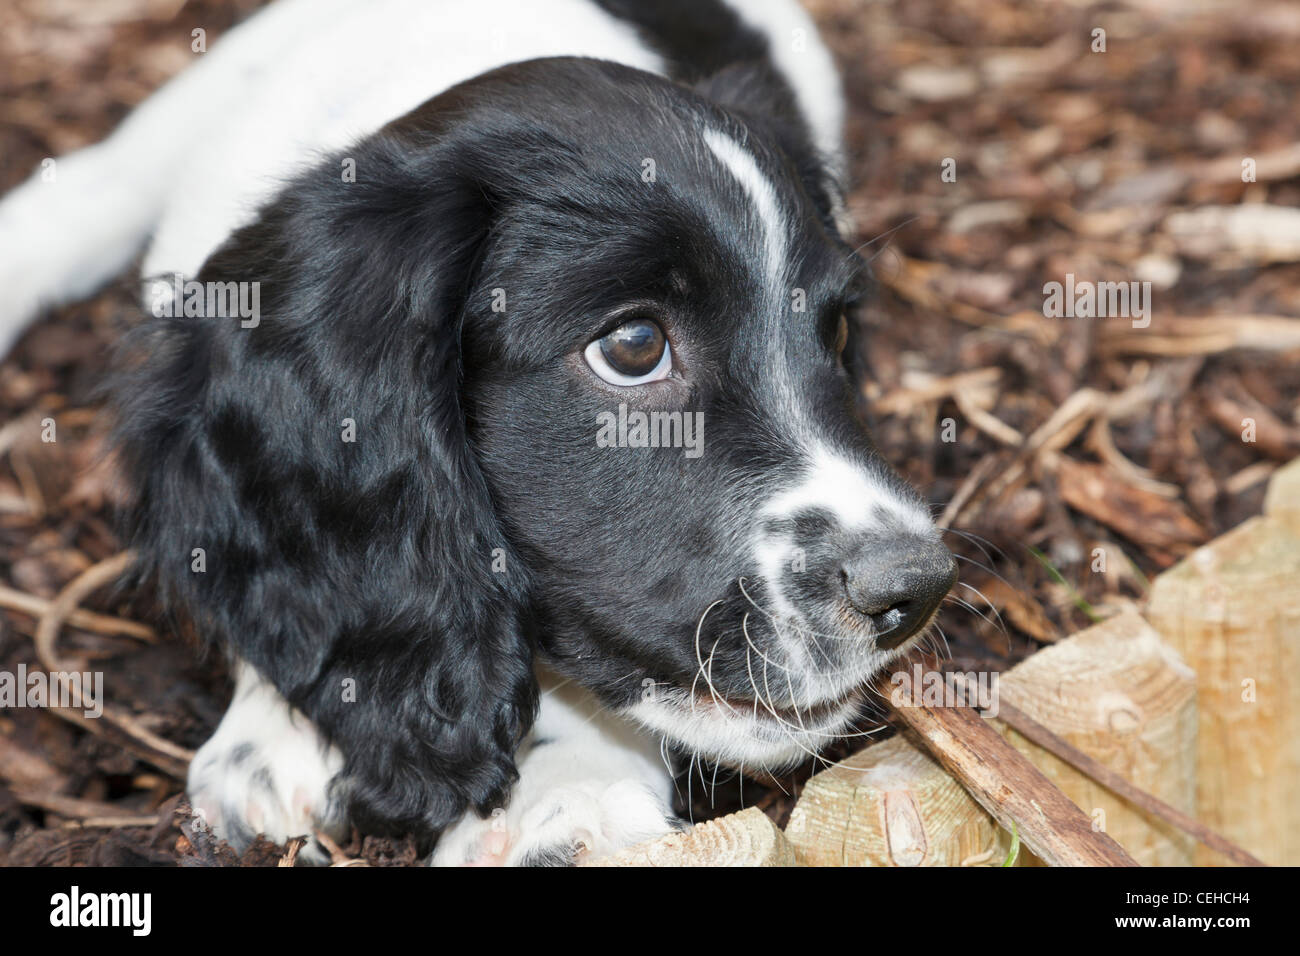 black springer spaniel puppy for sale